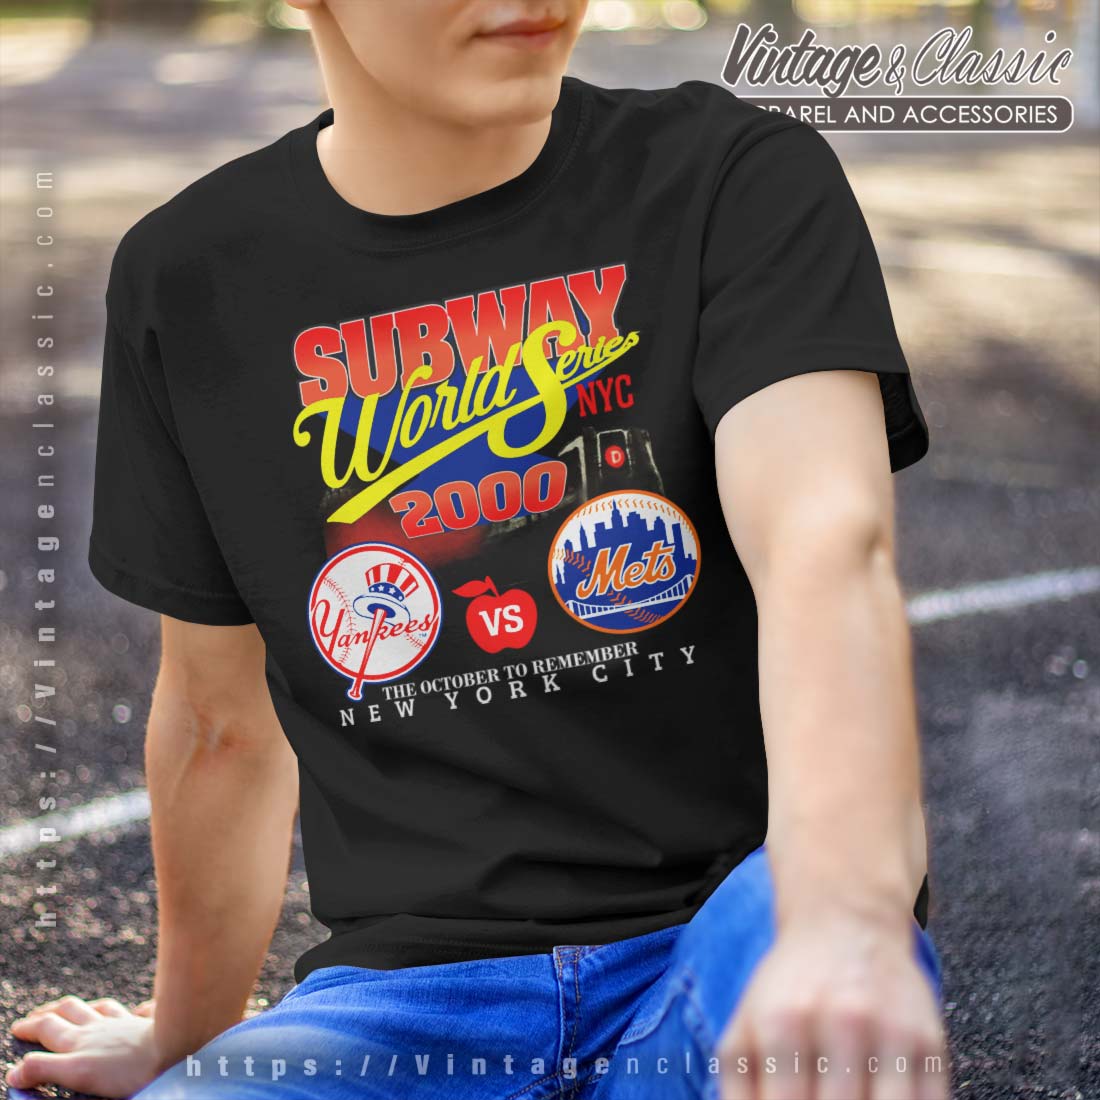 Product new York Subway Series Yankees Vs Mets Shirt, hoodie, sweater, long  sleeve and tank top